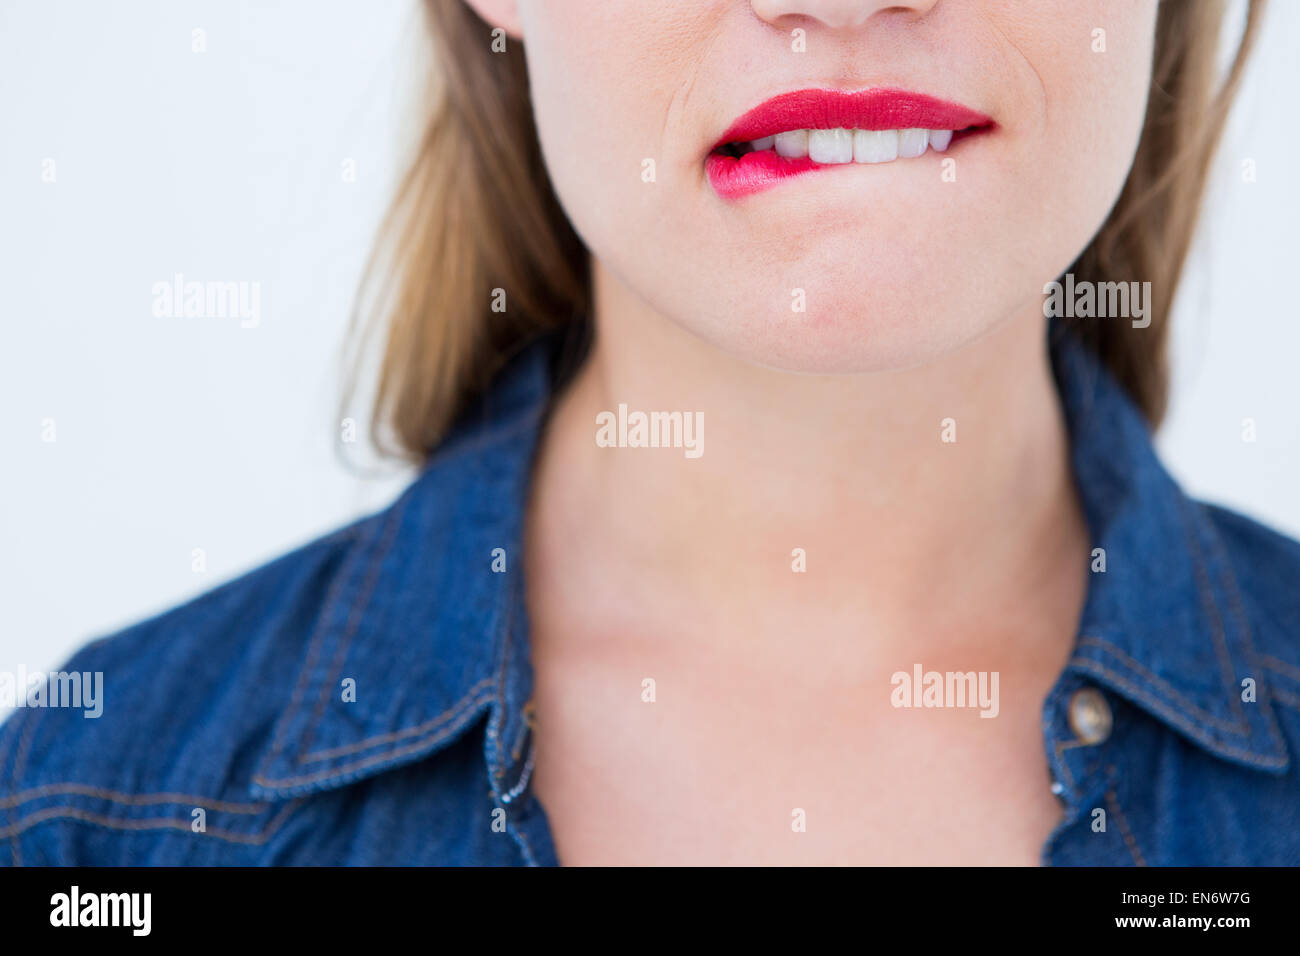 Woman biting her lip Stock Photo